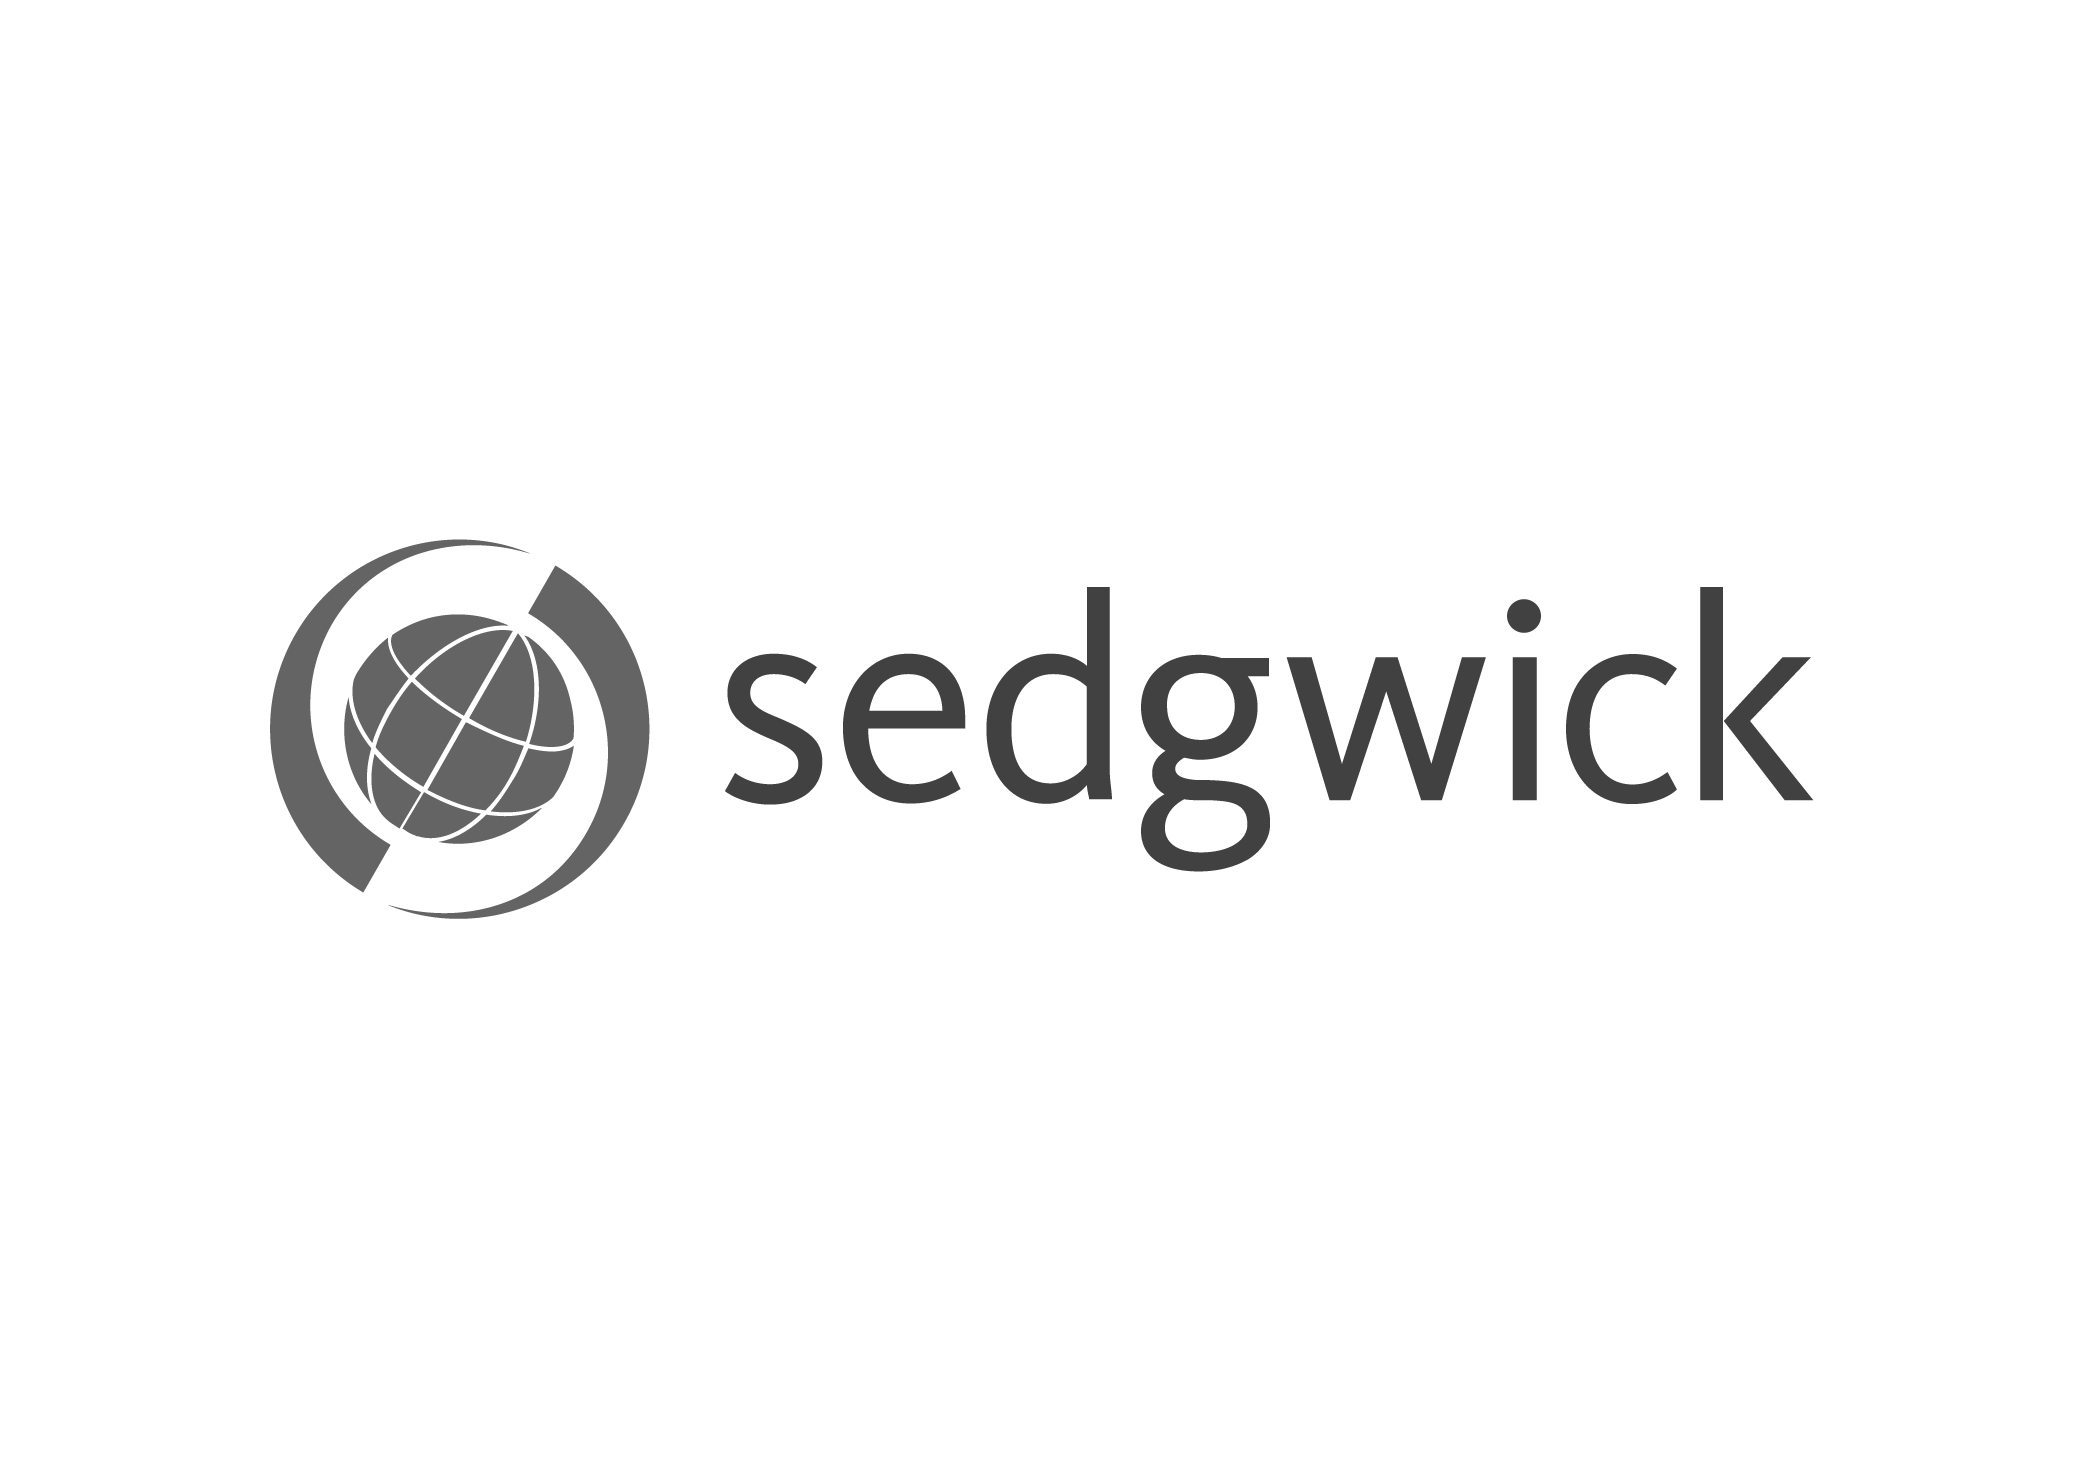 websitelogos_sedgewick